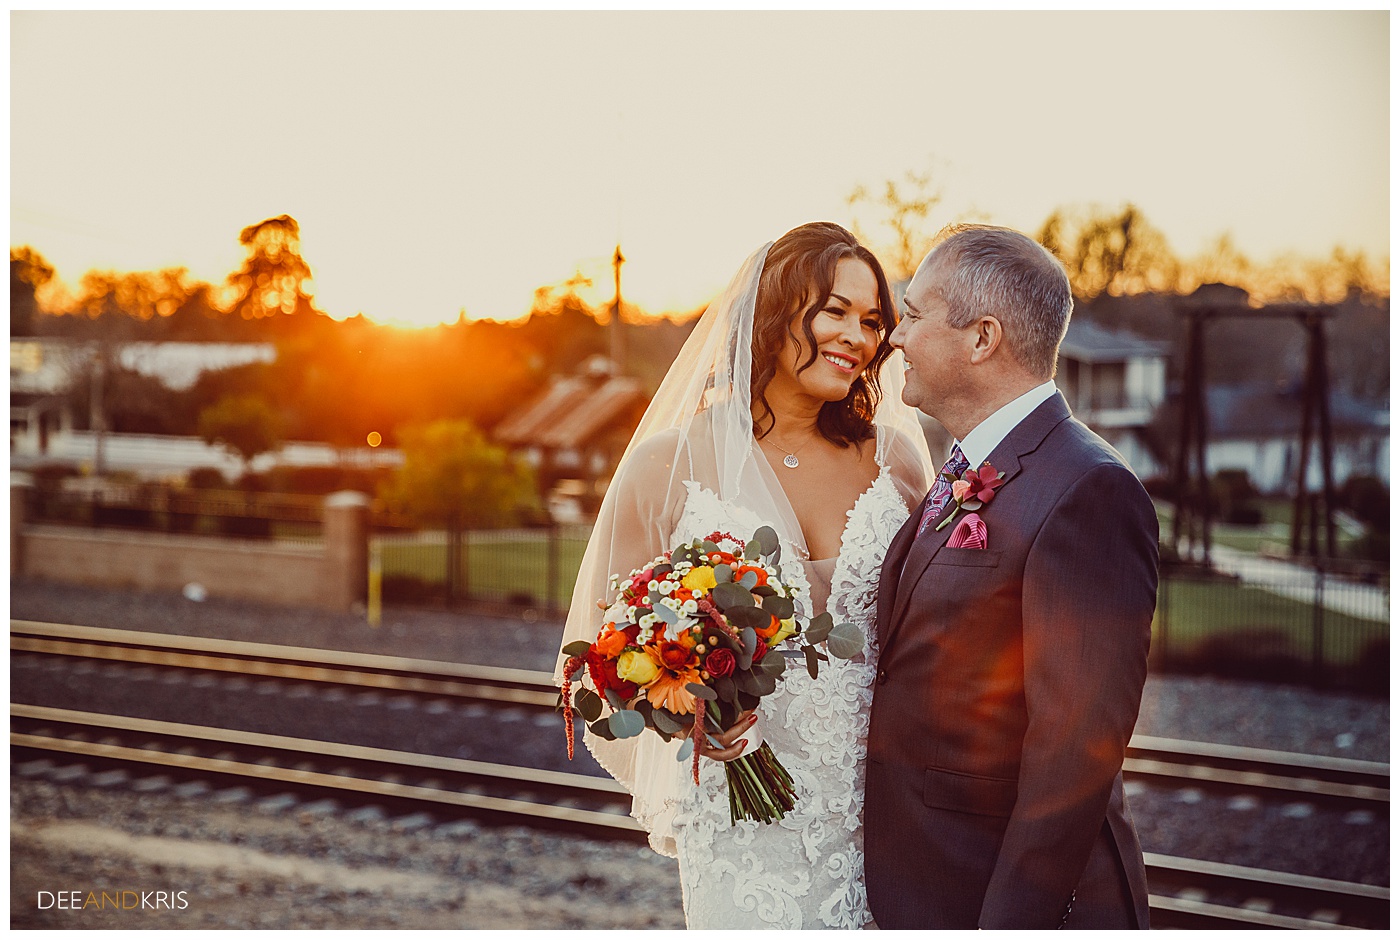 Dee and Kris Photography, Rocklin Wedding photographer